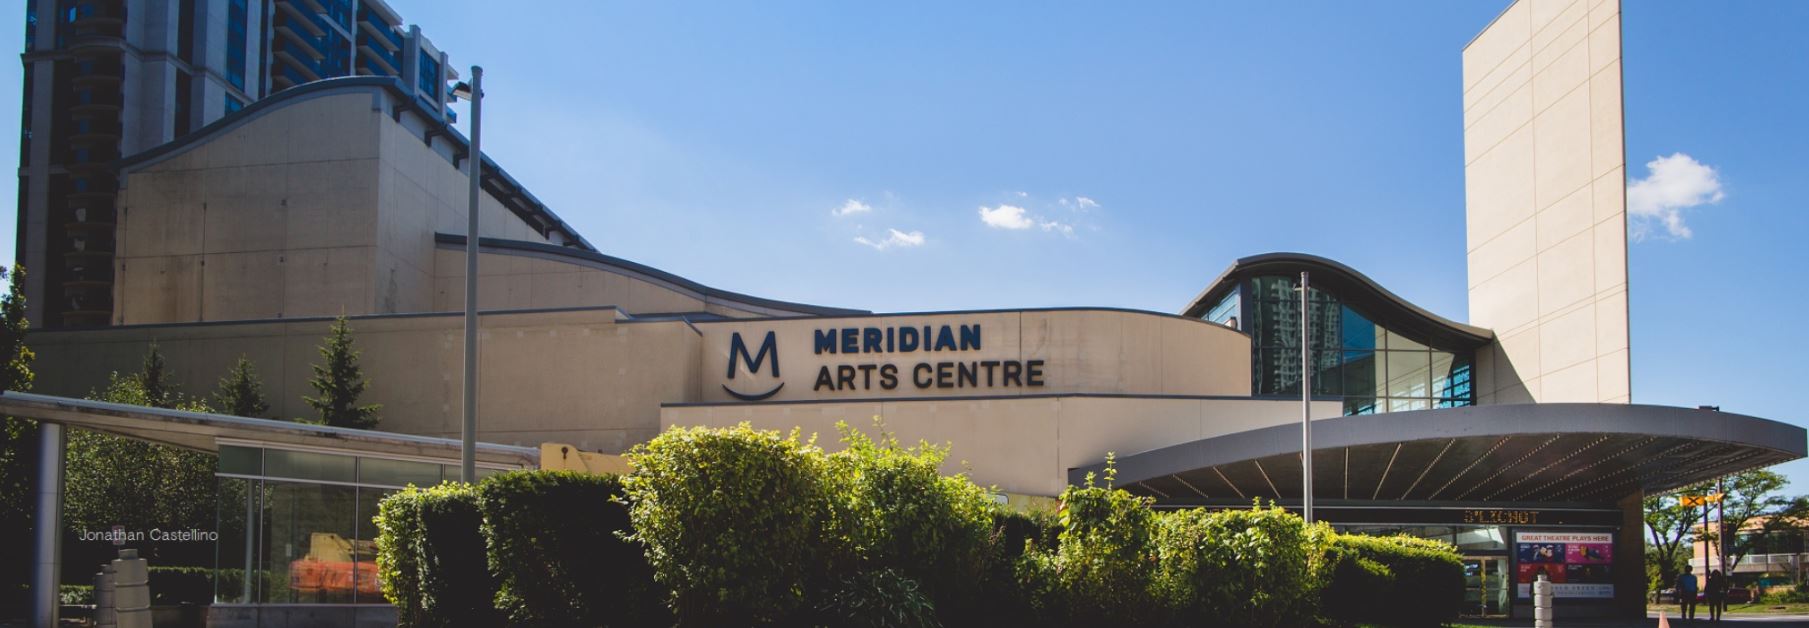 Gallery 2 - Meridian Arts Centre